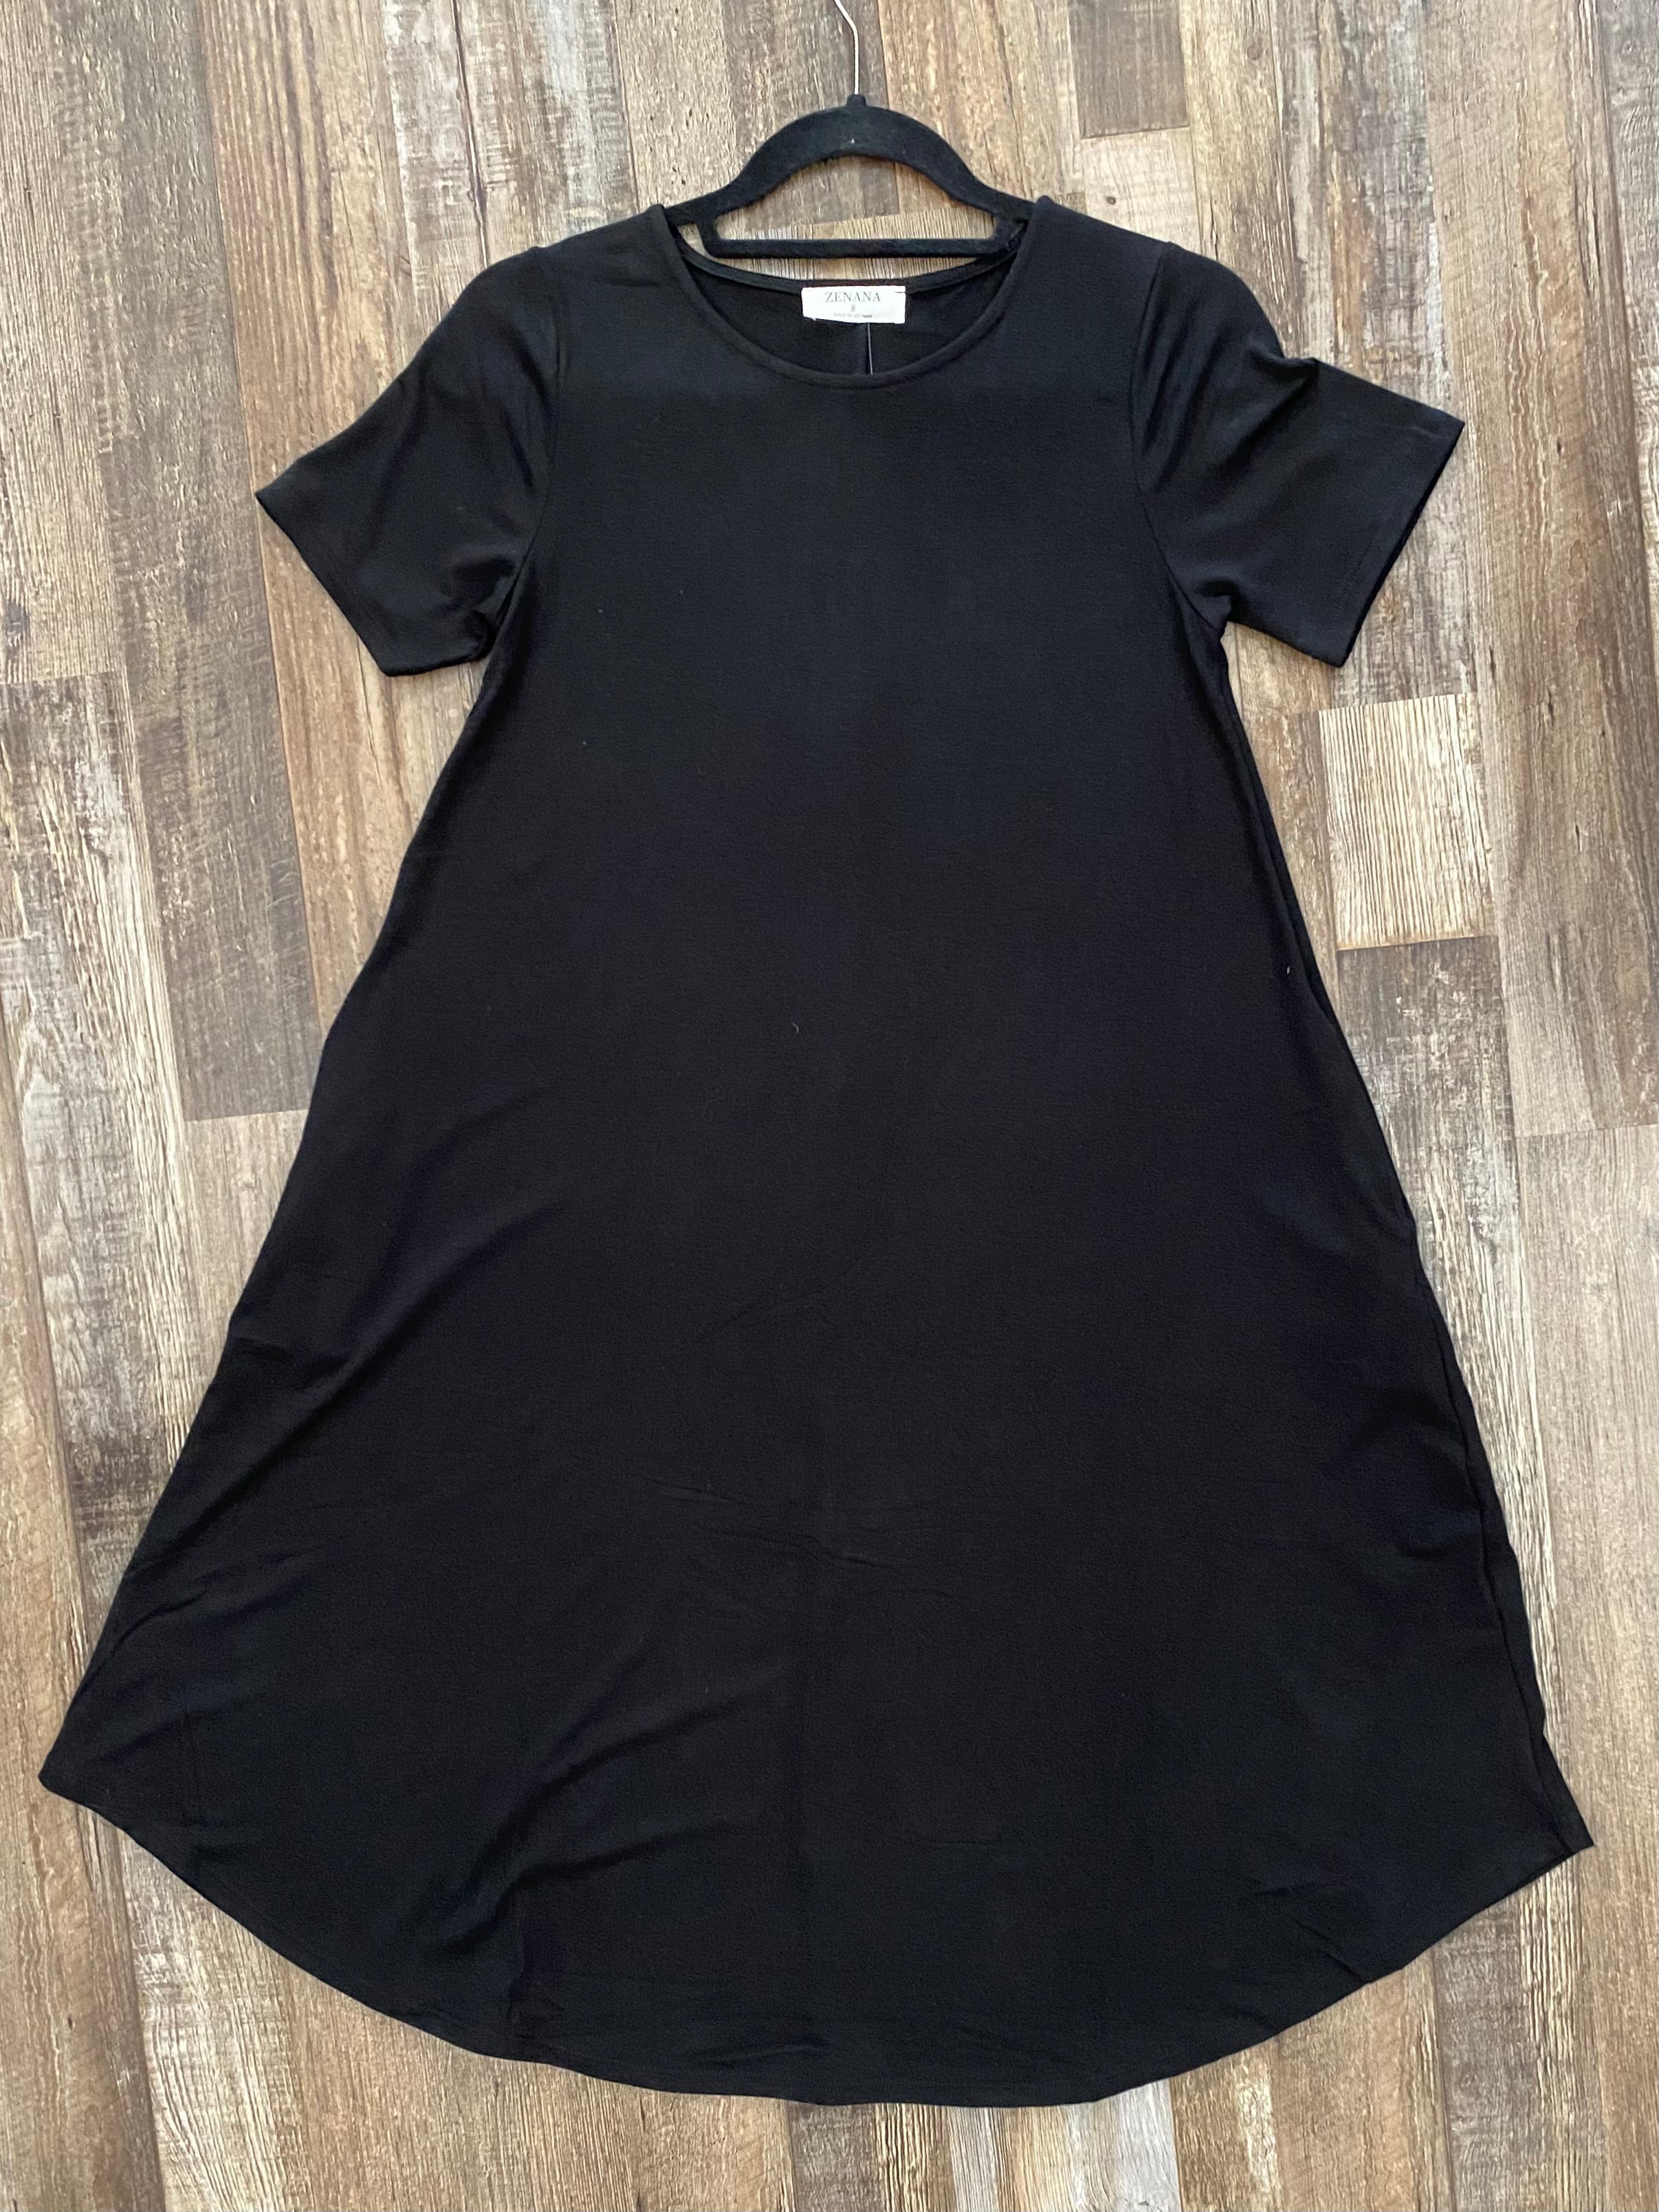 Black T-shirt Dress 2